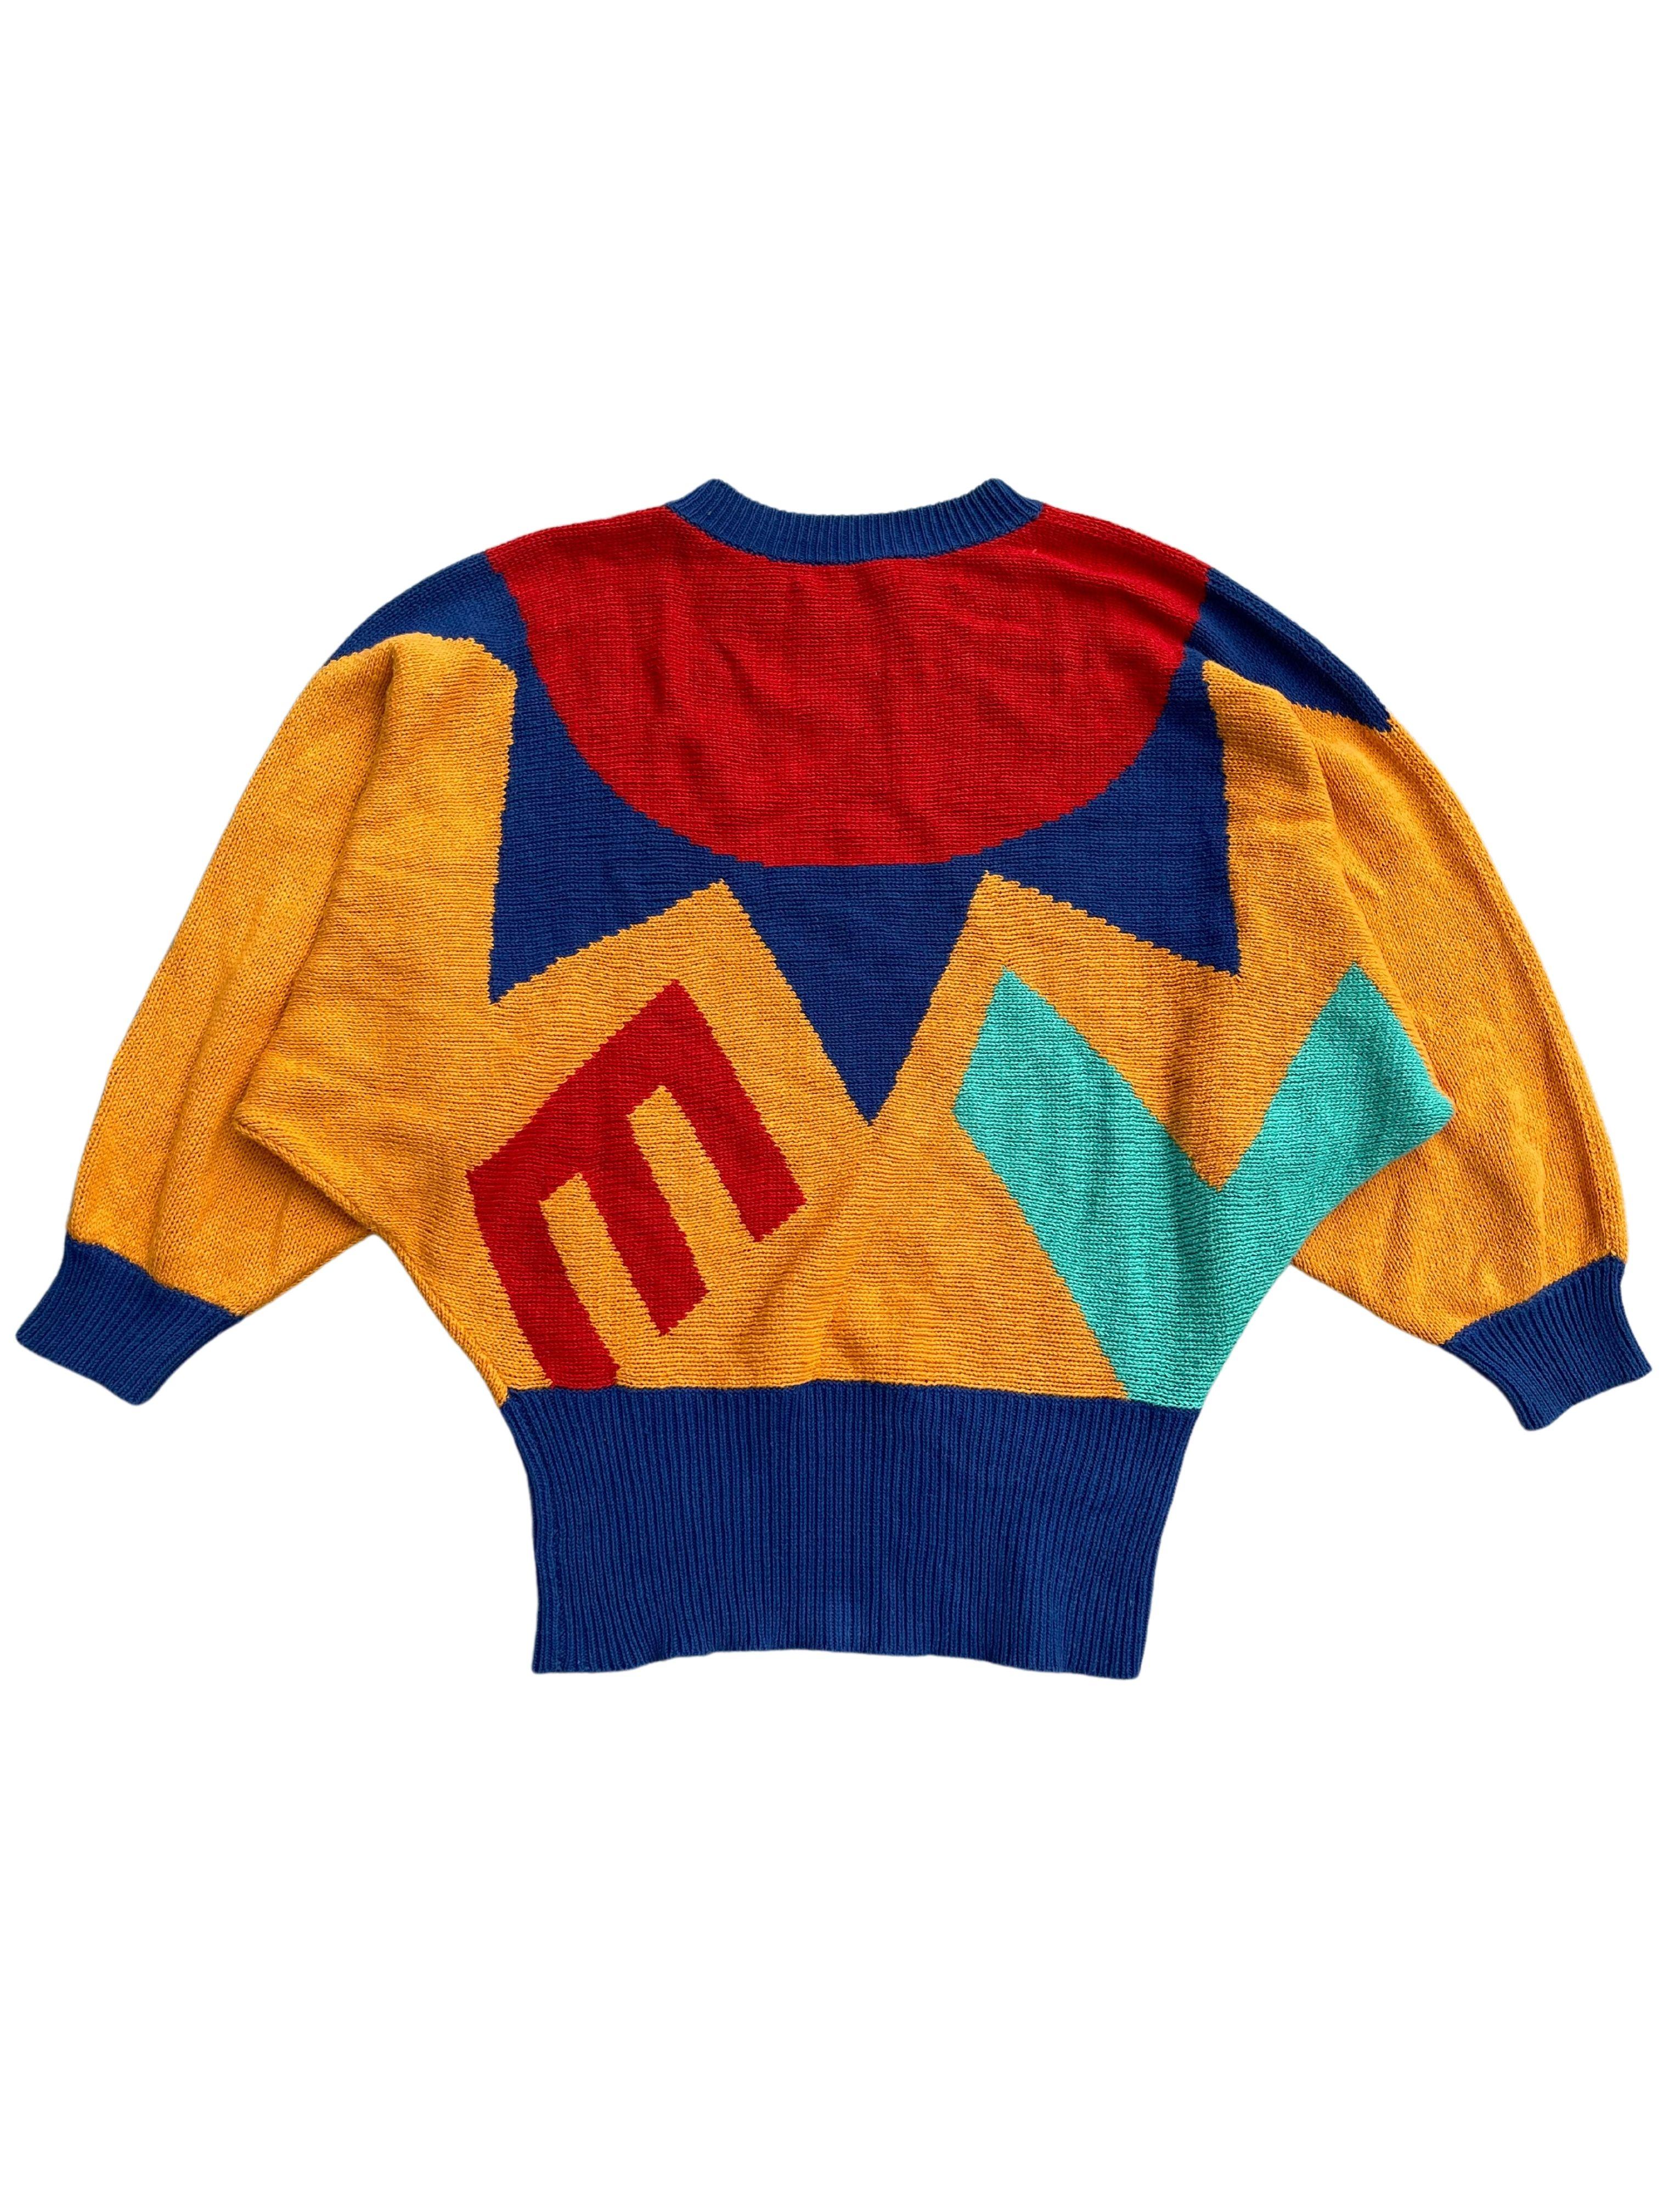 1980s sweaters